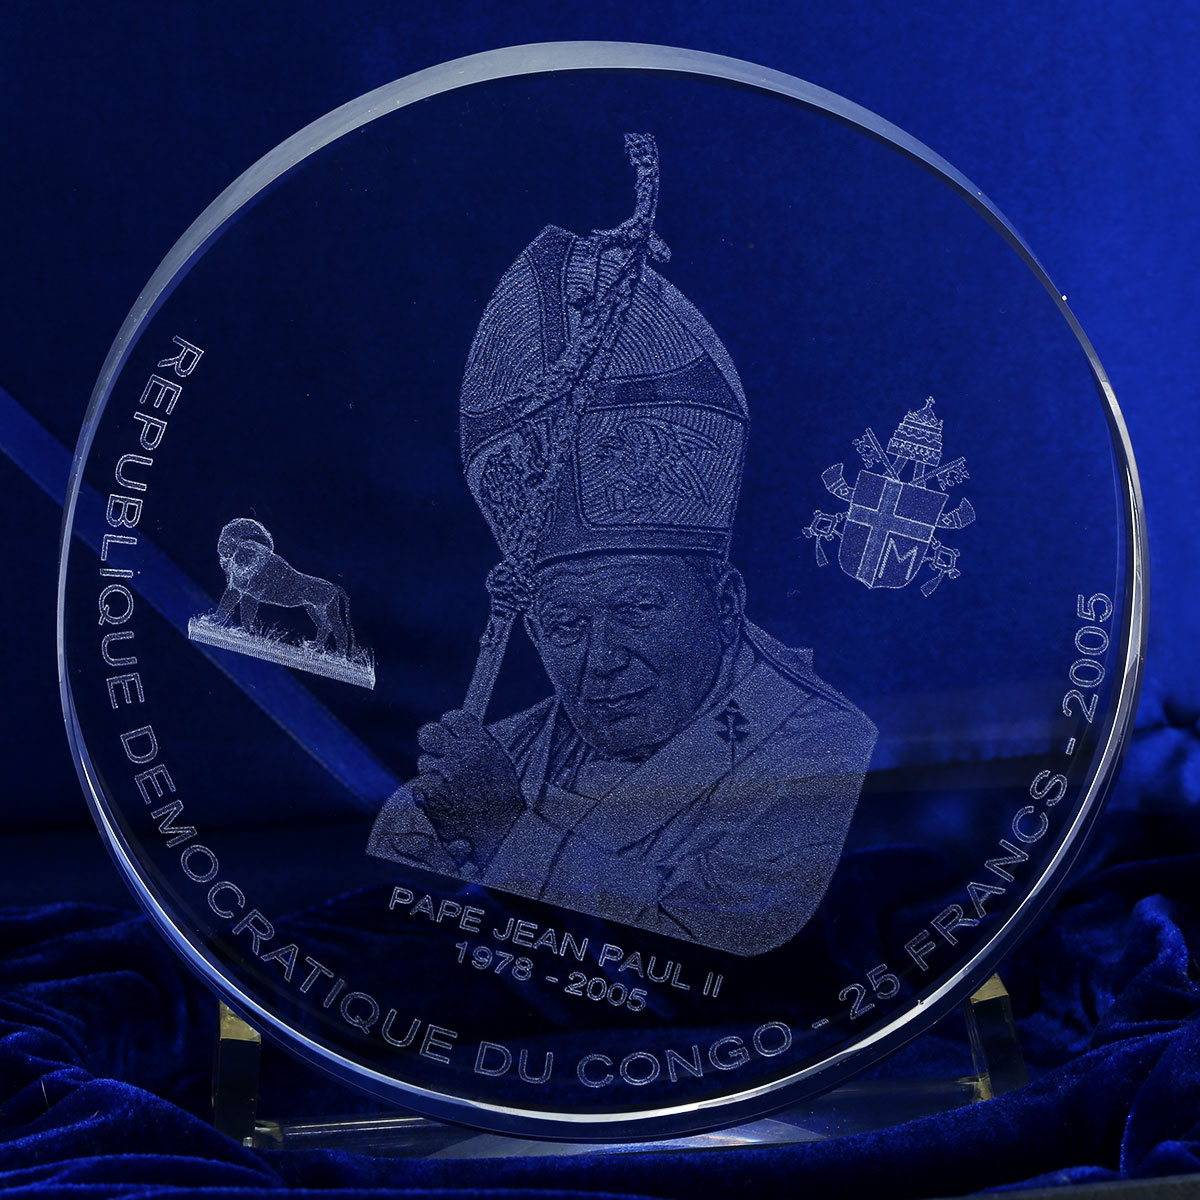 Congo 25 francs Pape Jean Paul II acryle coin 2005